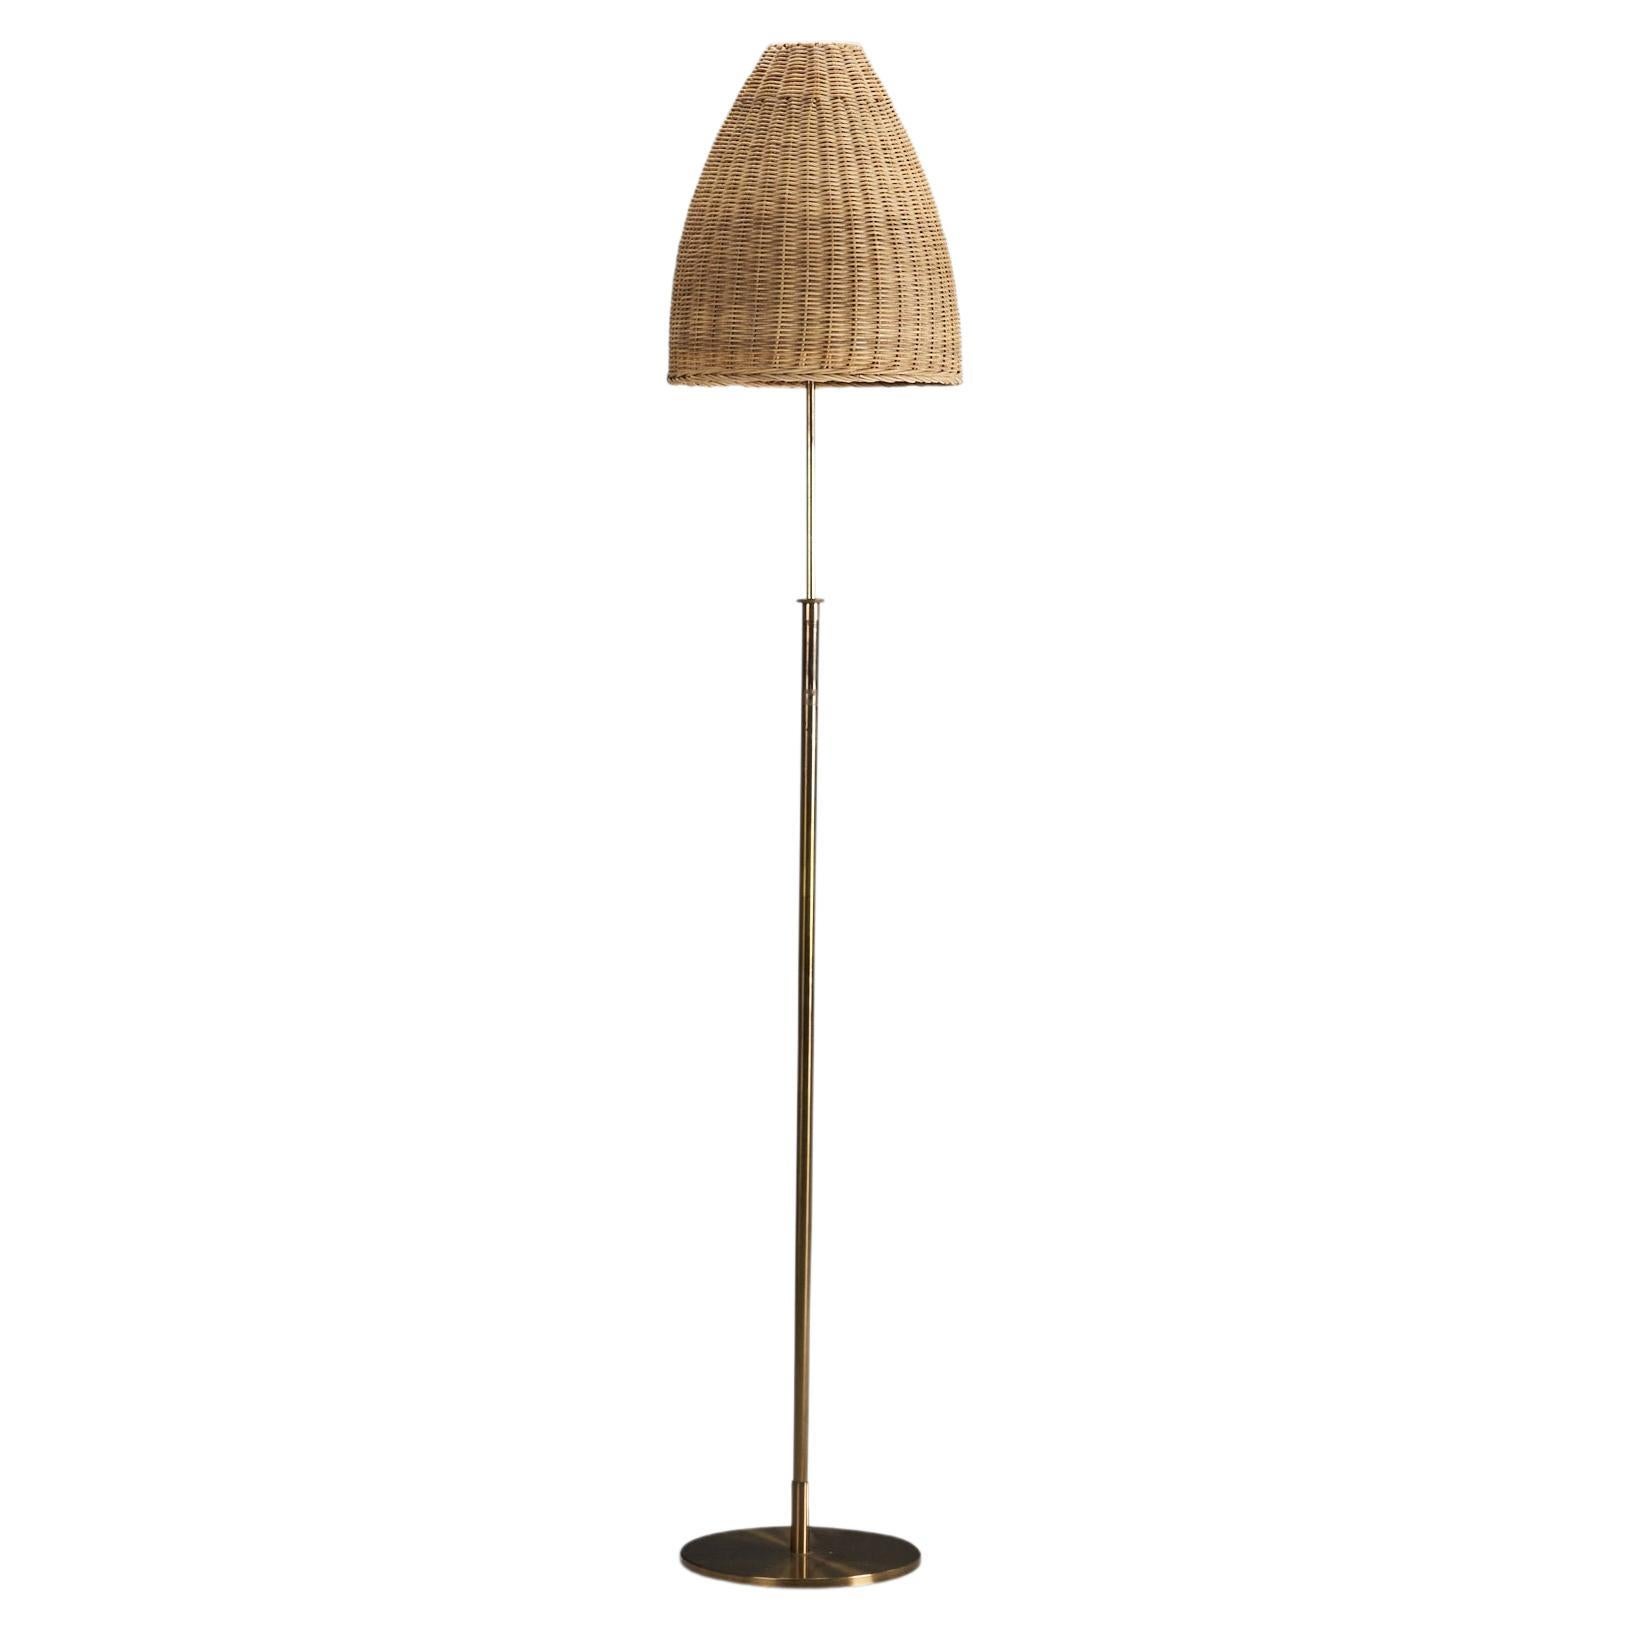 H.W. Armatur, Floor Lamp, Brass, Rattan, Sweden, 1940s For Sale